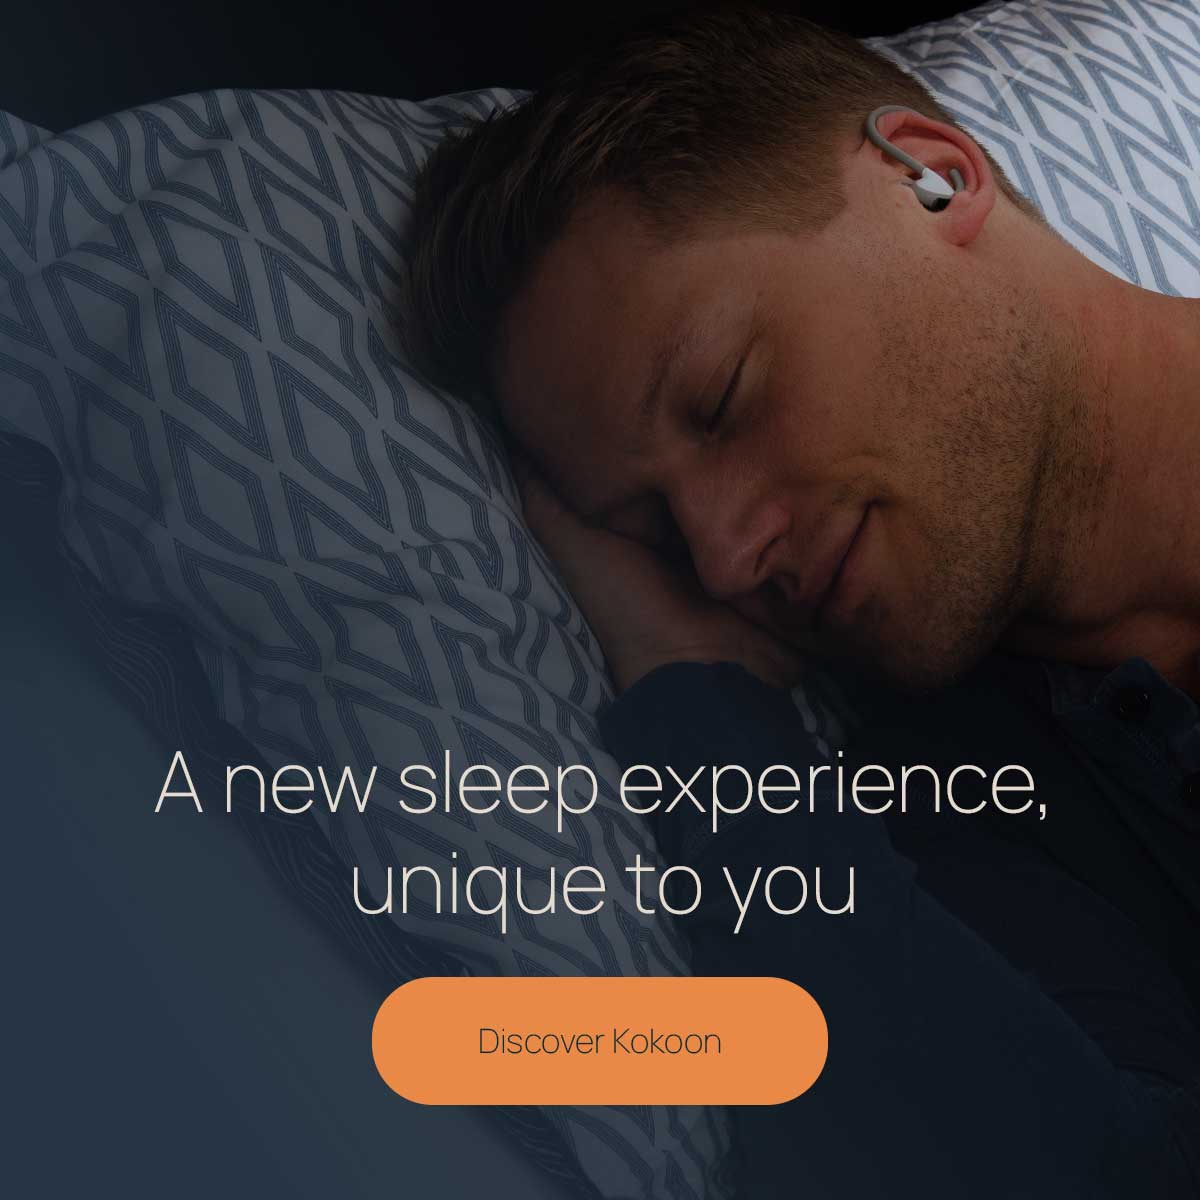 Discover a new sleep experience, discover Kokoon